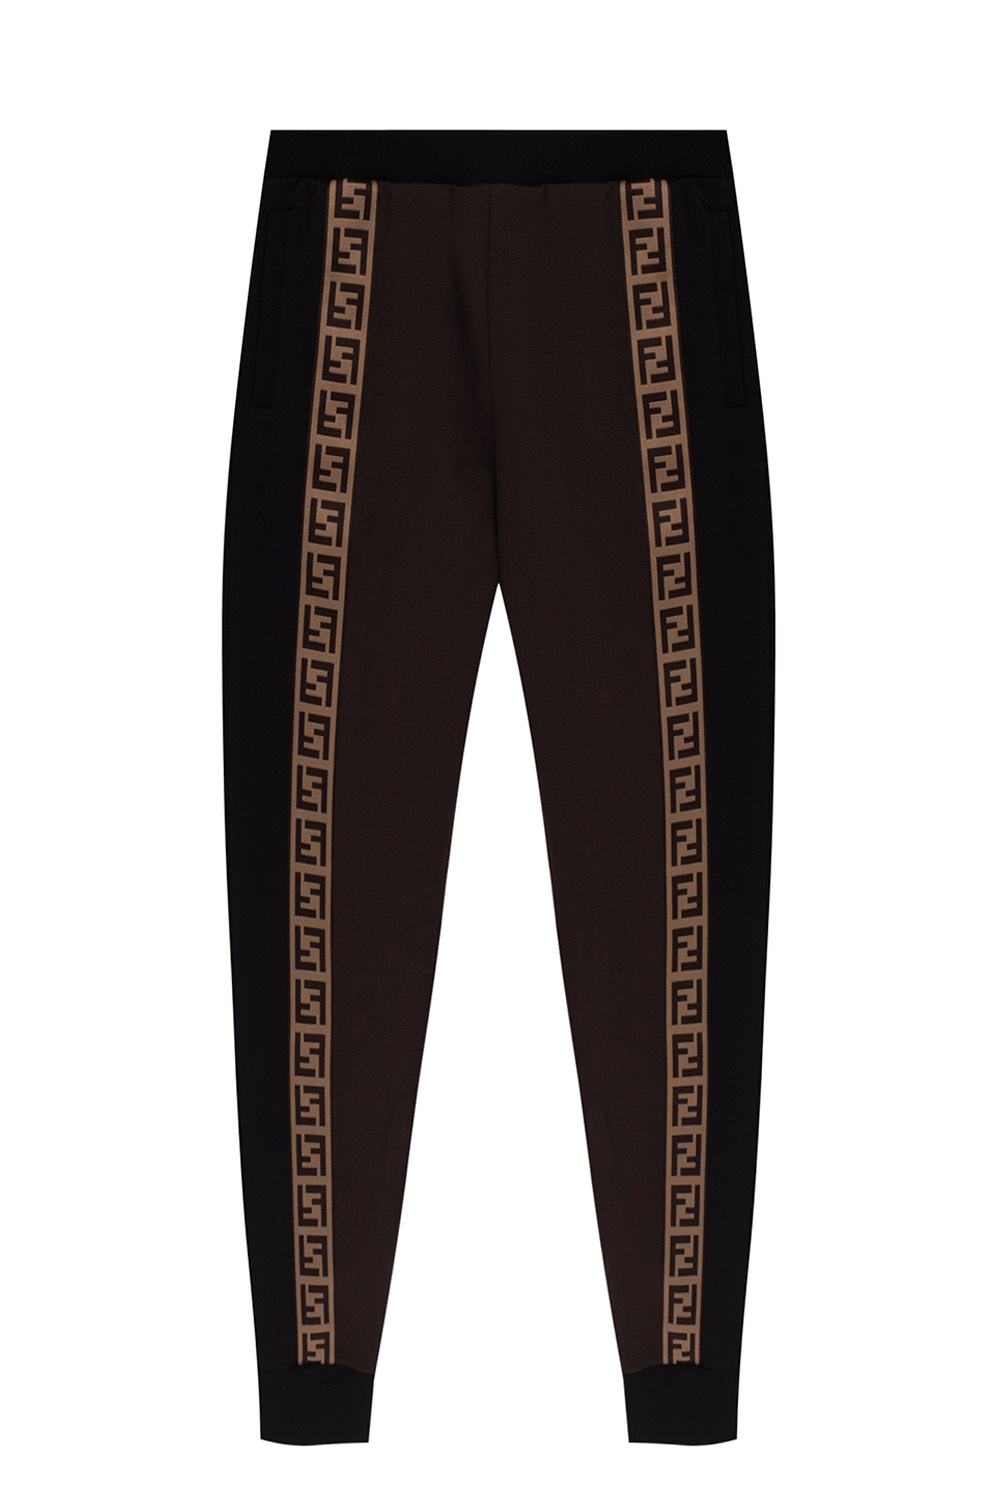 Fendi Sweatpants with logo | Men's Clothing | Vitkac